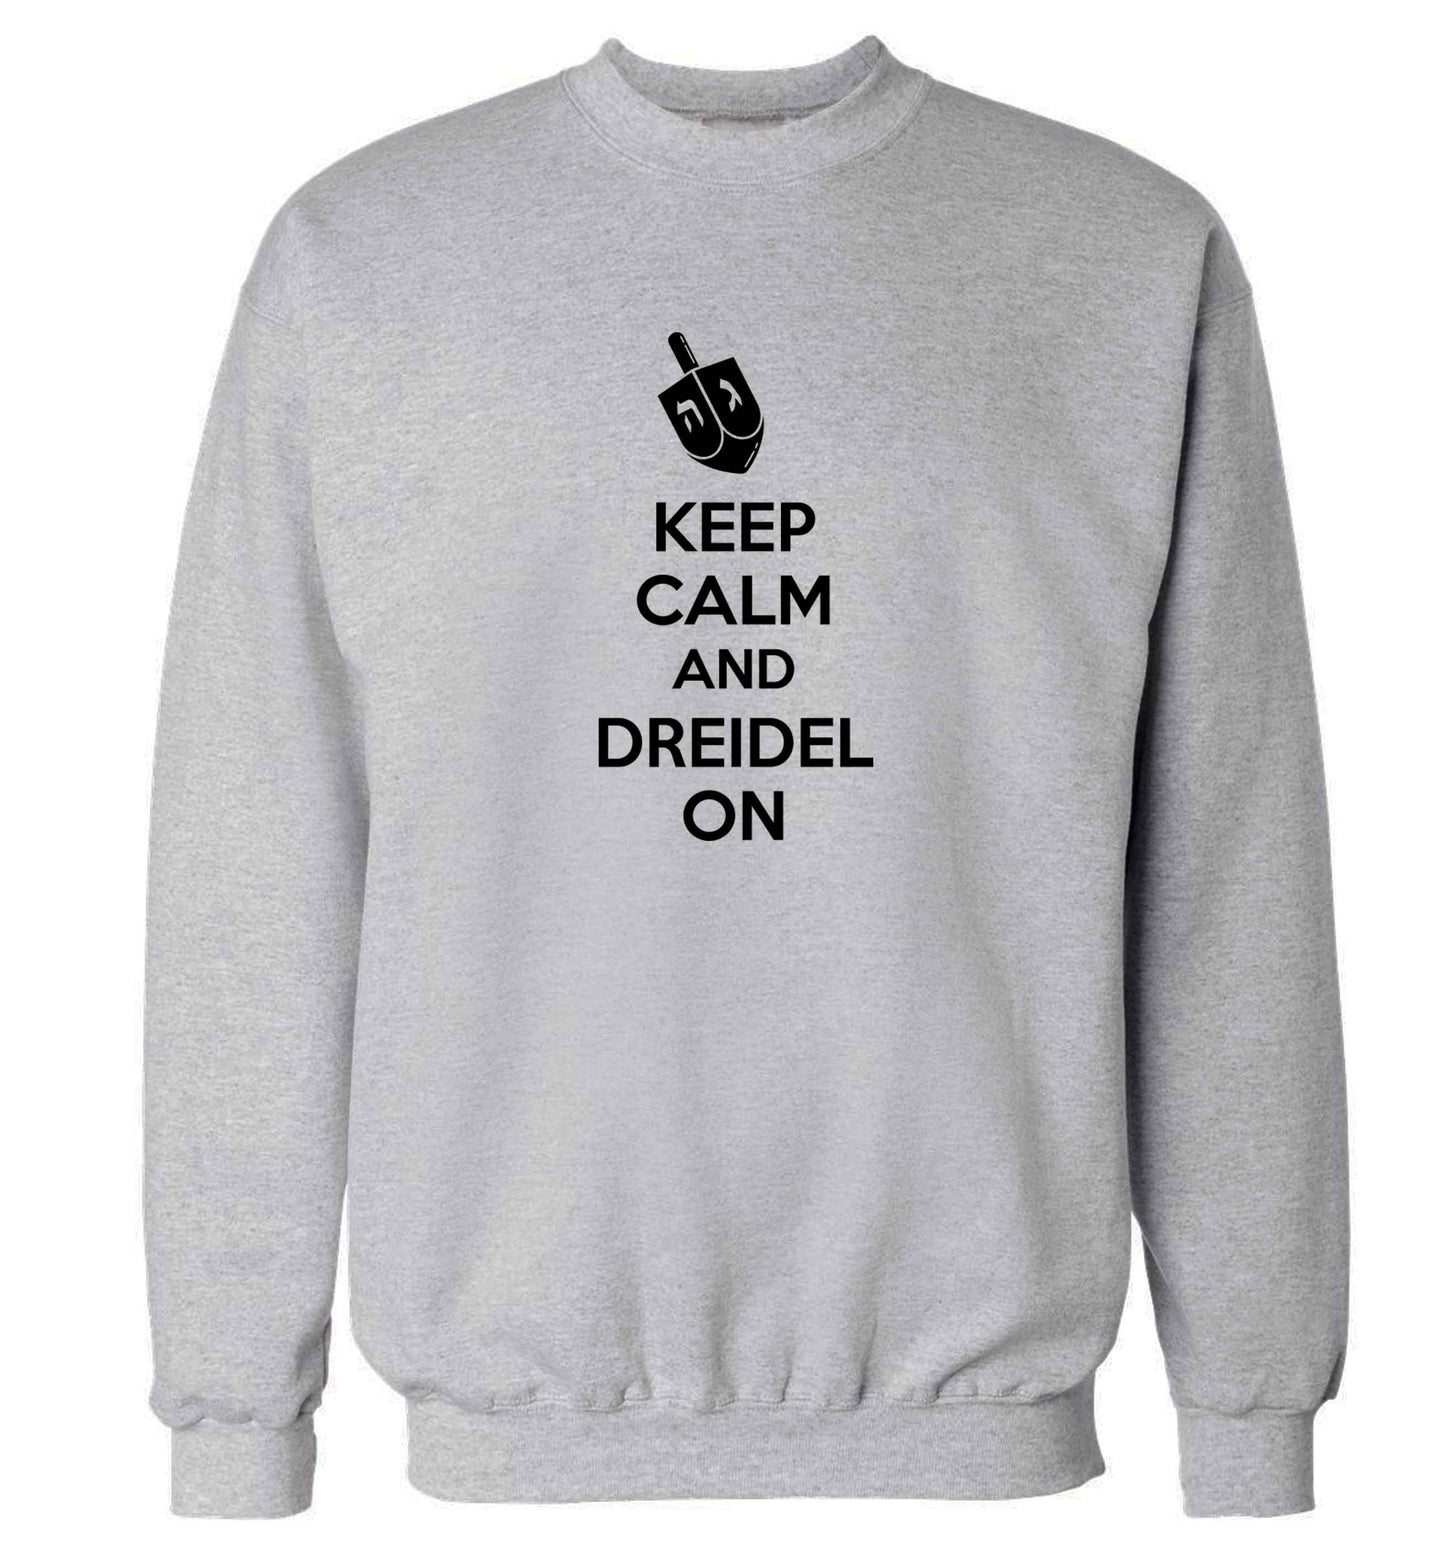 Keep calm and dreidel on adult's unisex grey sweater 2XL